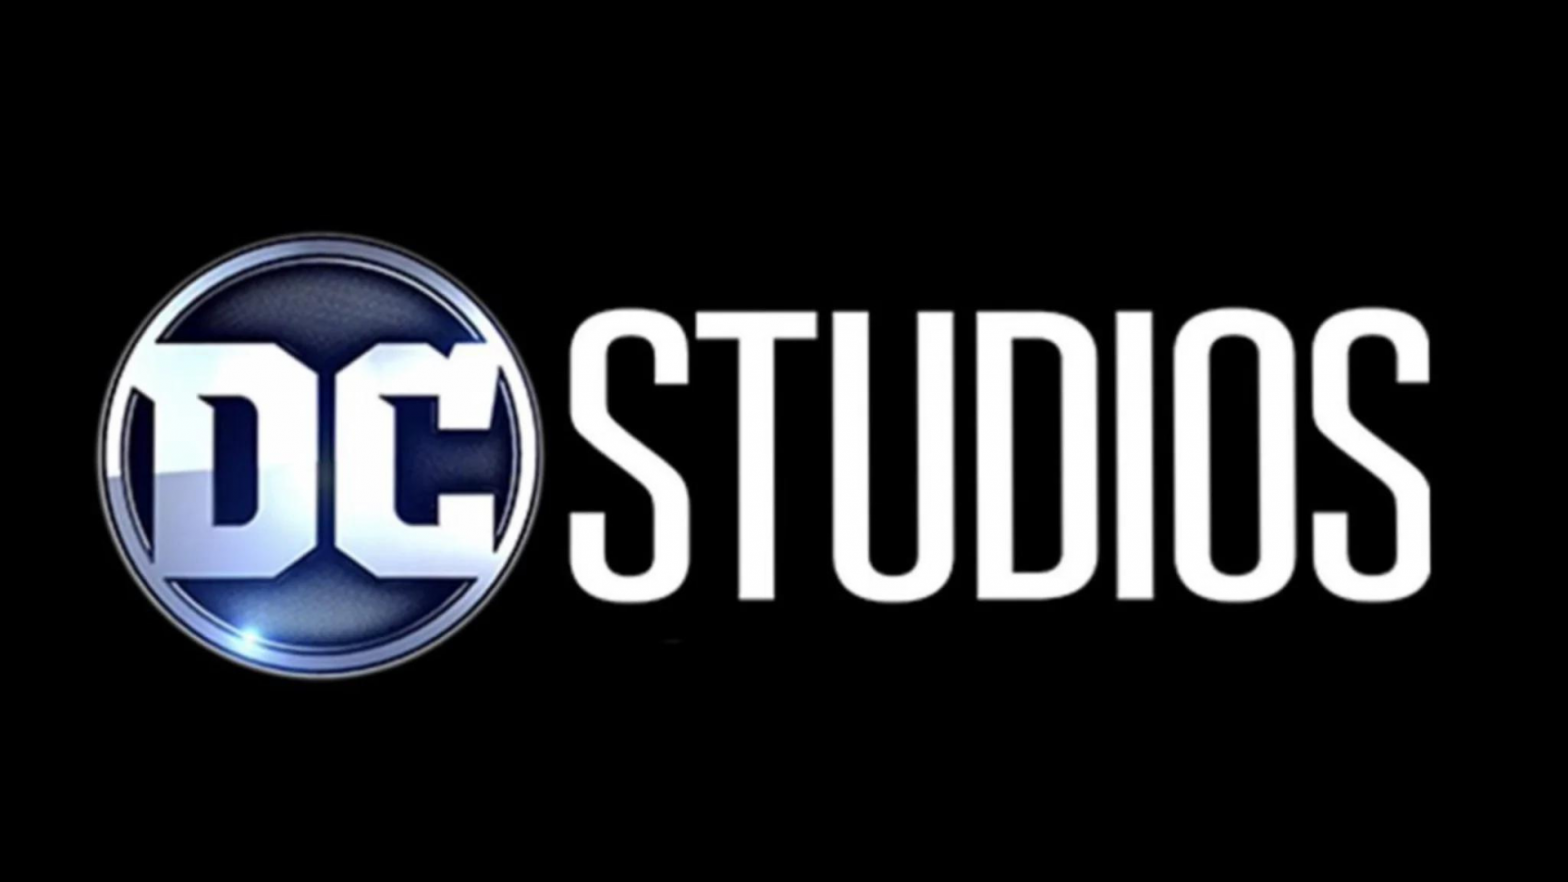 Segundo site, DC Studios planeja reboot completo de seu universo